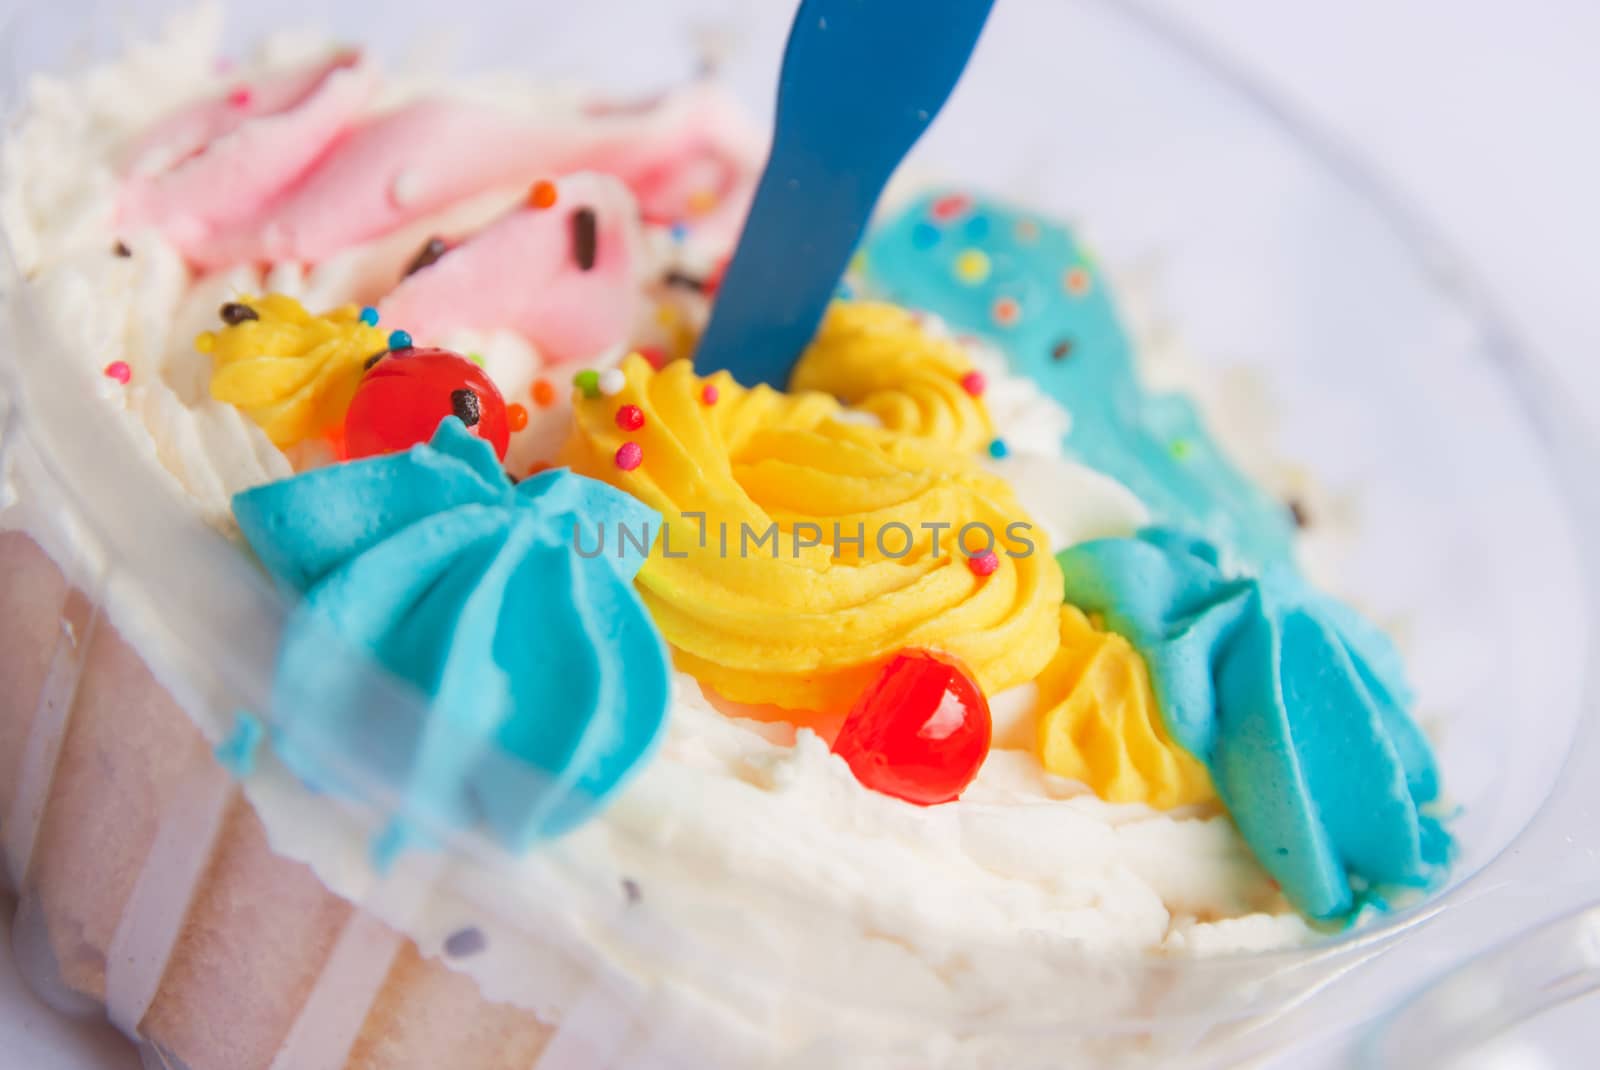 Cream cake by jimbophoto